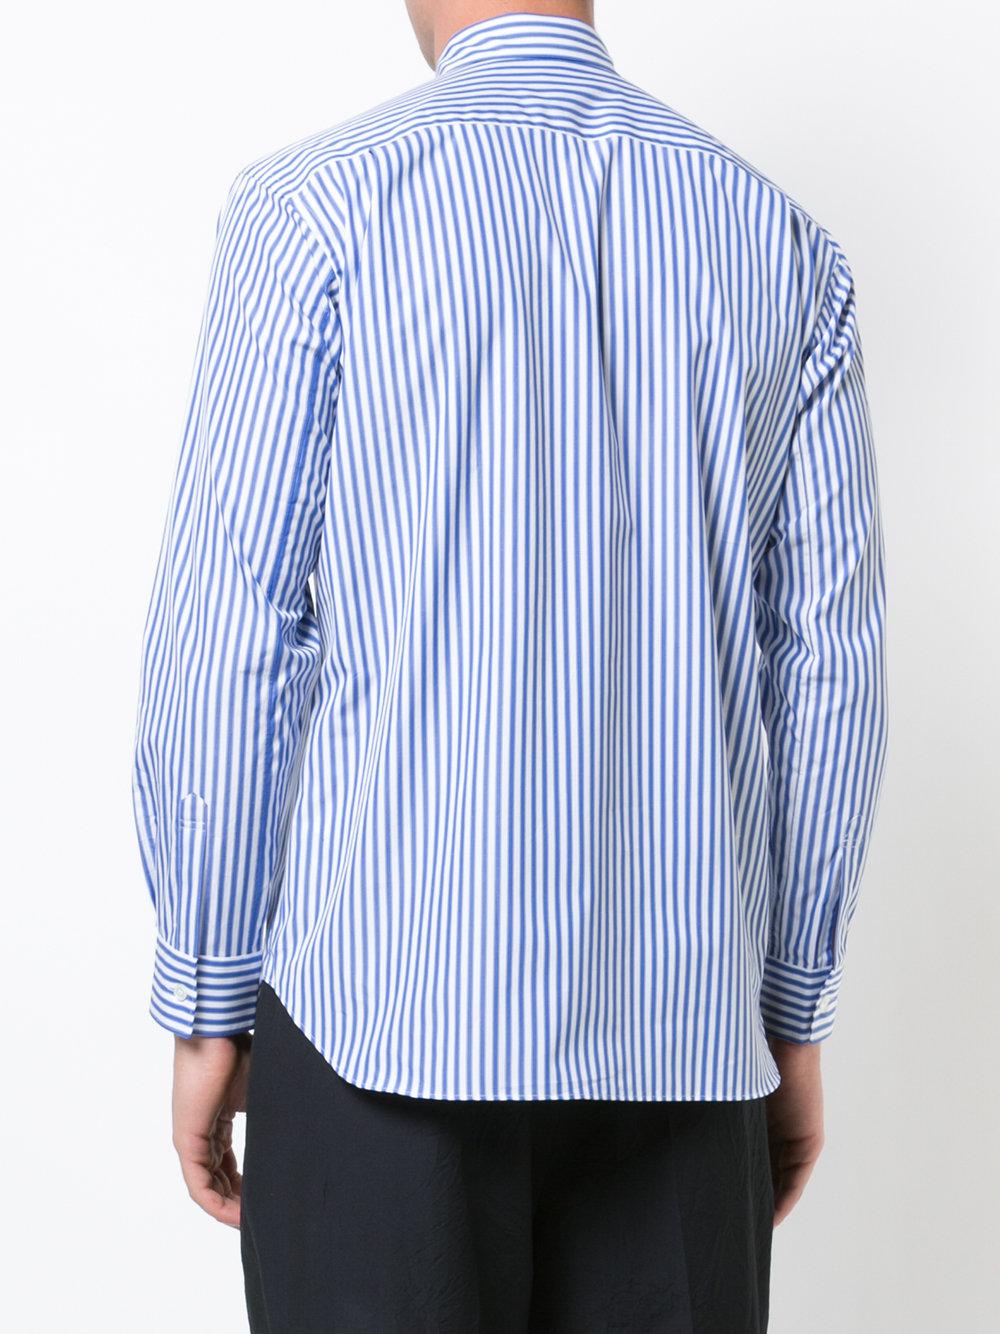 Lyst - Comme Des Garçons Striped Shirt in Blue for Men